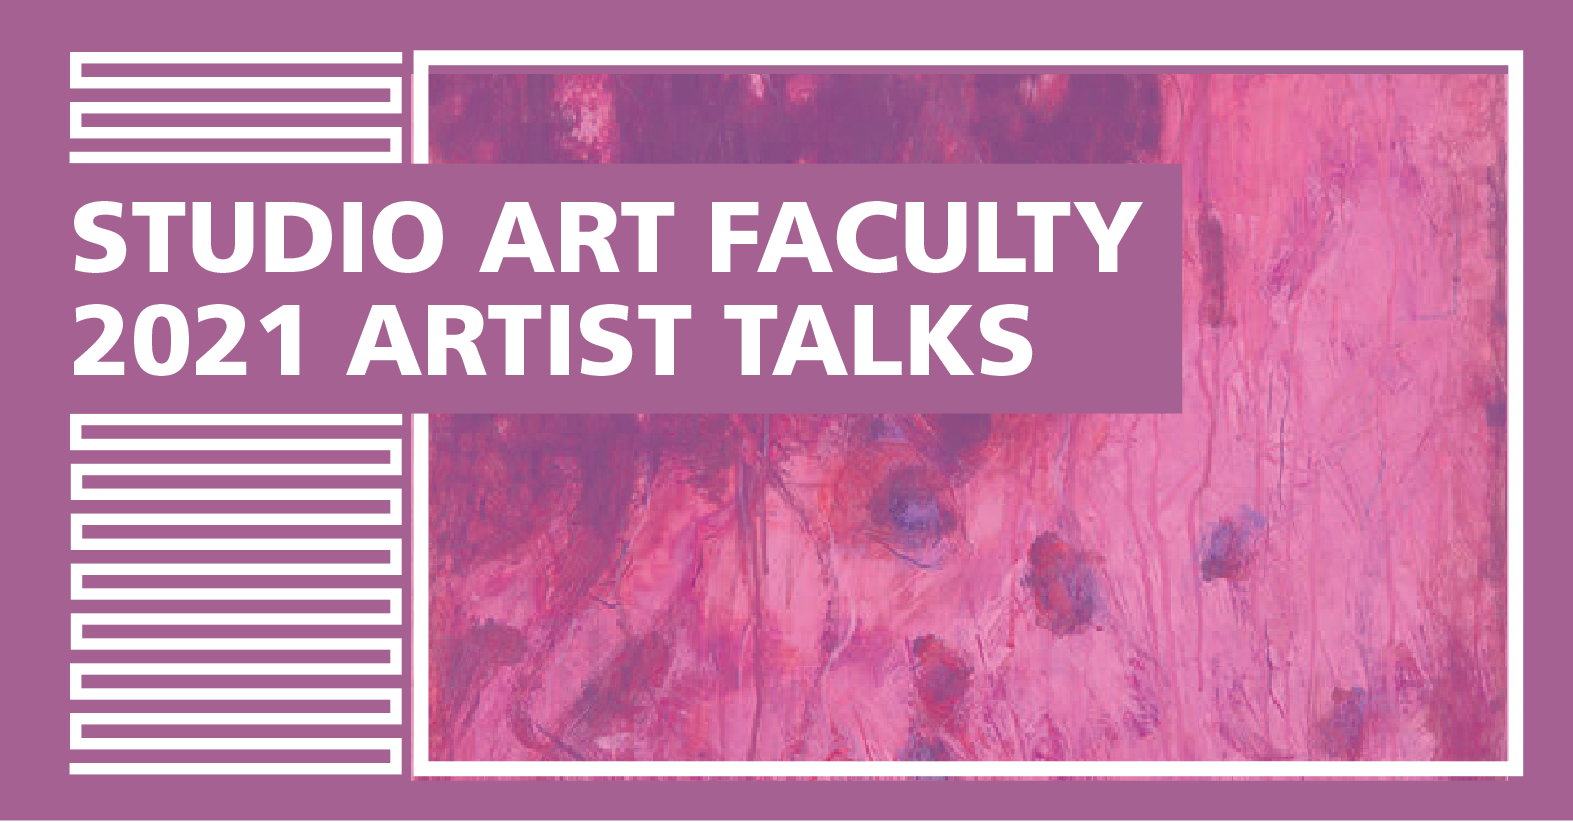 Studio Art Faculty 2021 Artist Talks